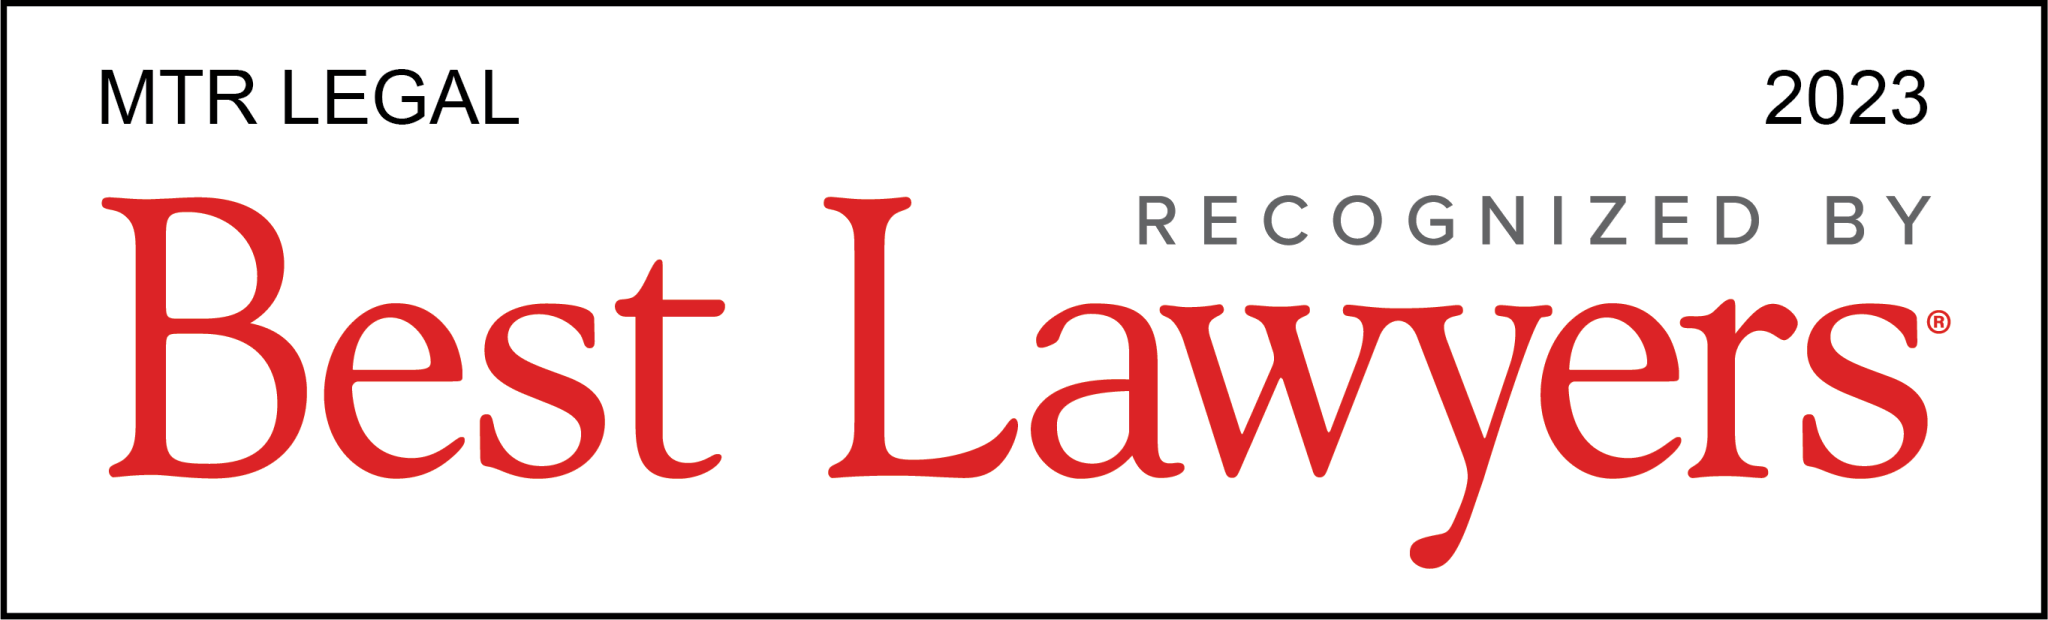 MTR Legal: Best Lawyers 